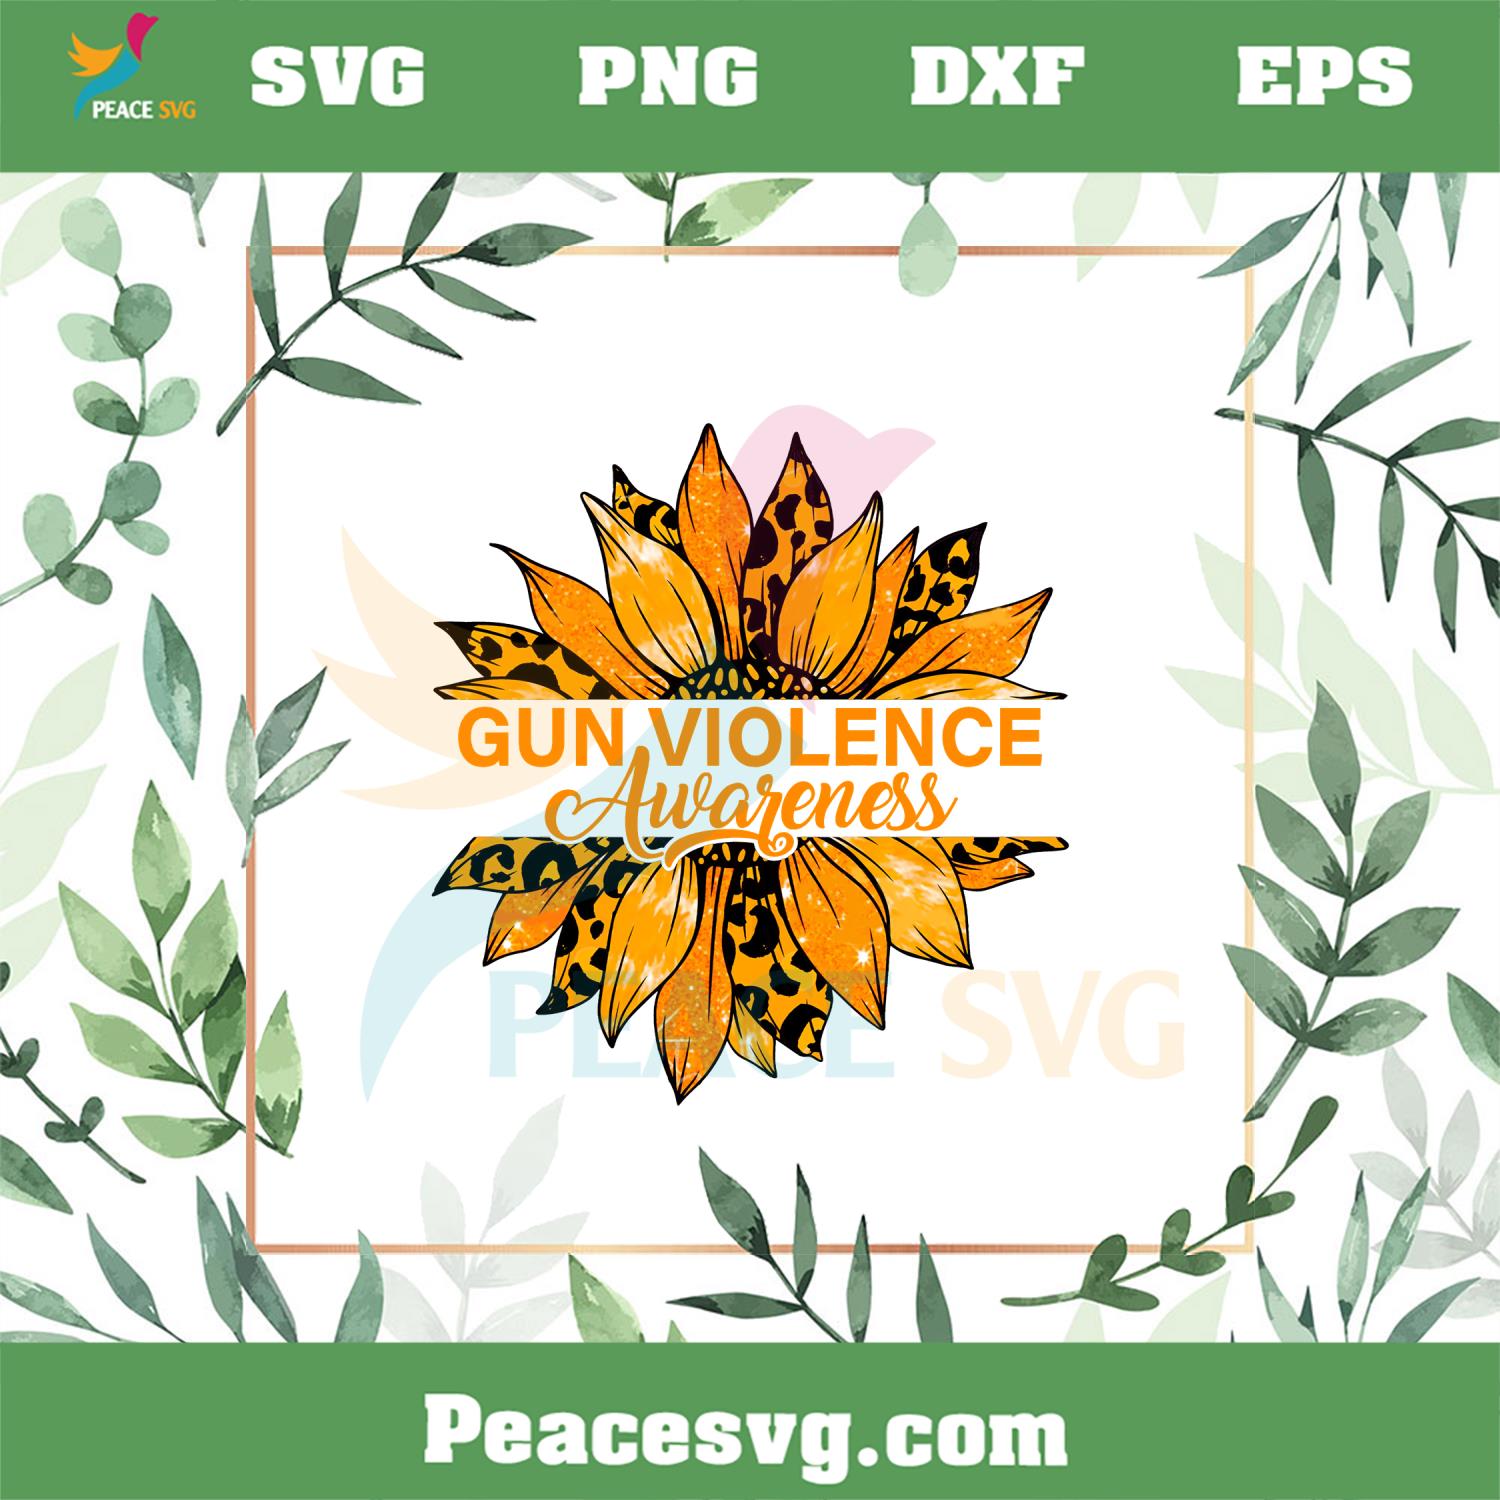 In June We Wear Orange Gun Violence Awareness Day PNG Sublimation Files